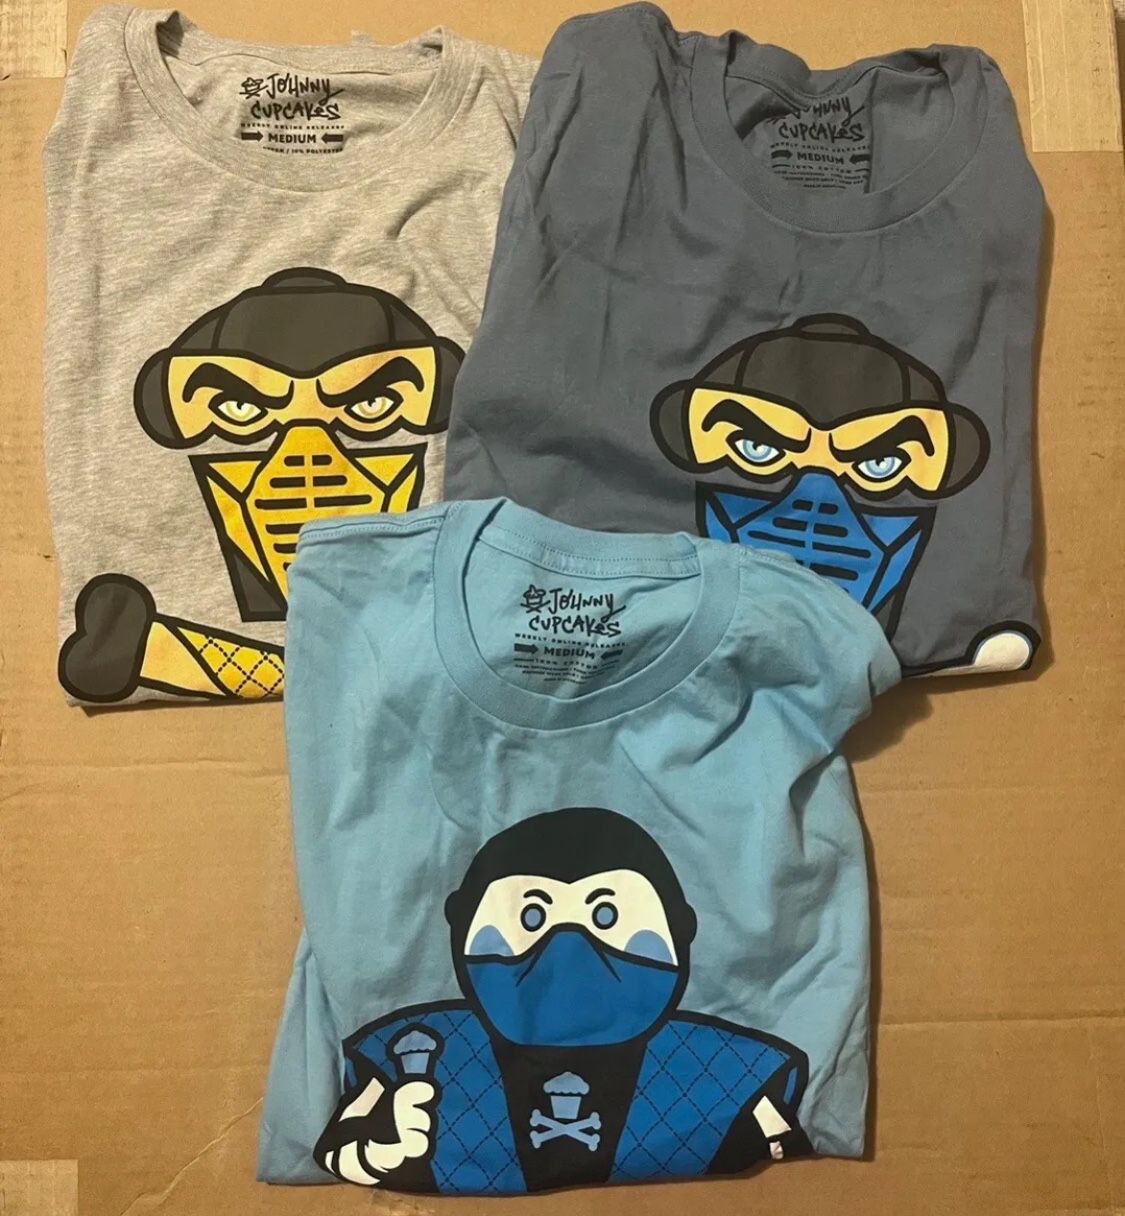 New Johnny Cupcakes Men’s Med Mortal Kombat  Shirts Lot Sub-Zero and Scorpion